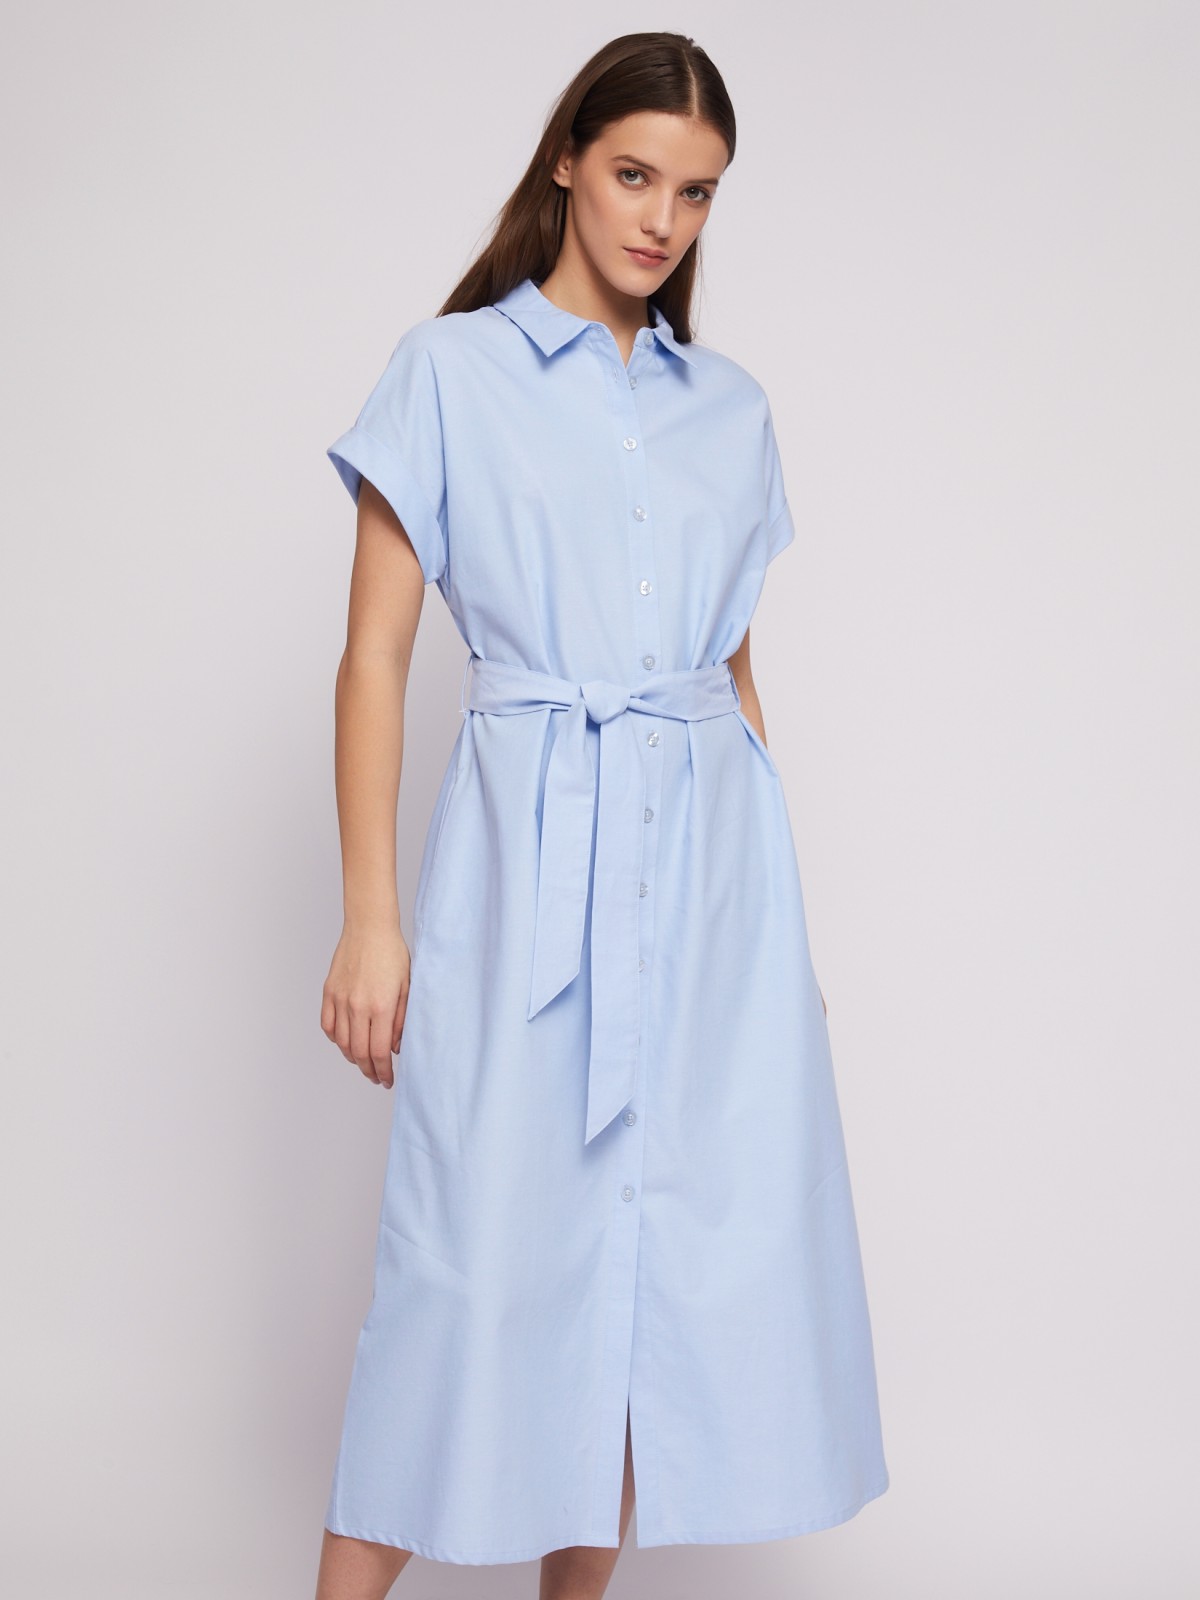 Платье-рубашка из хлопка с коротким рукавом и поясом